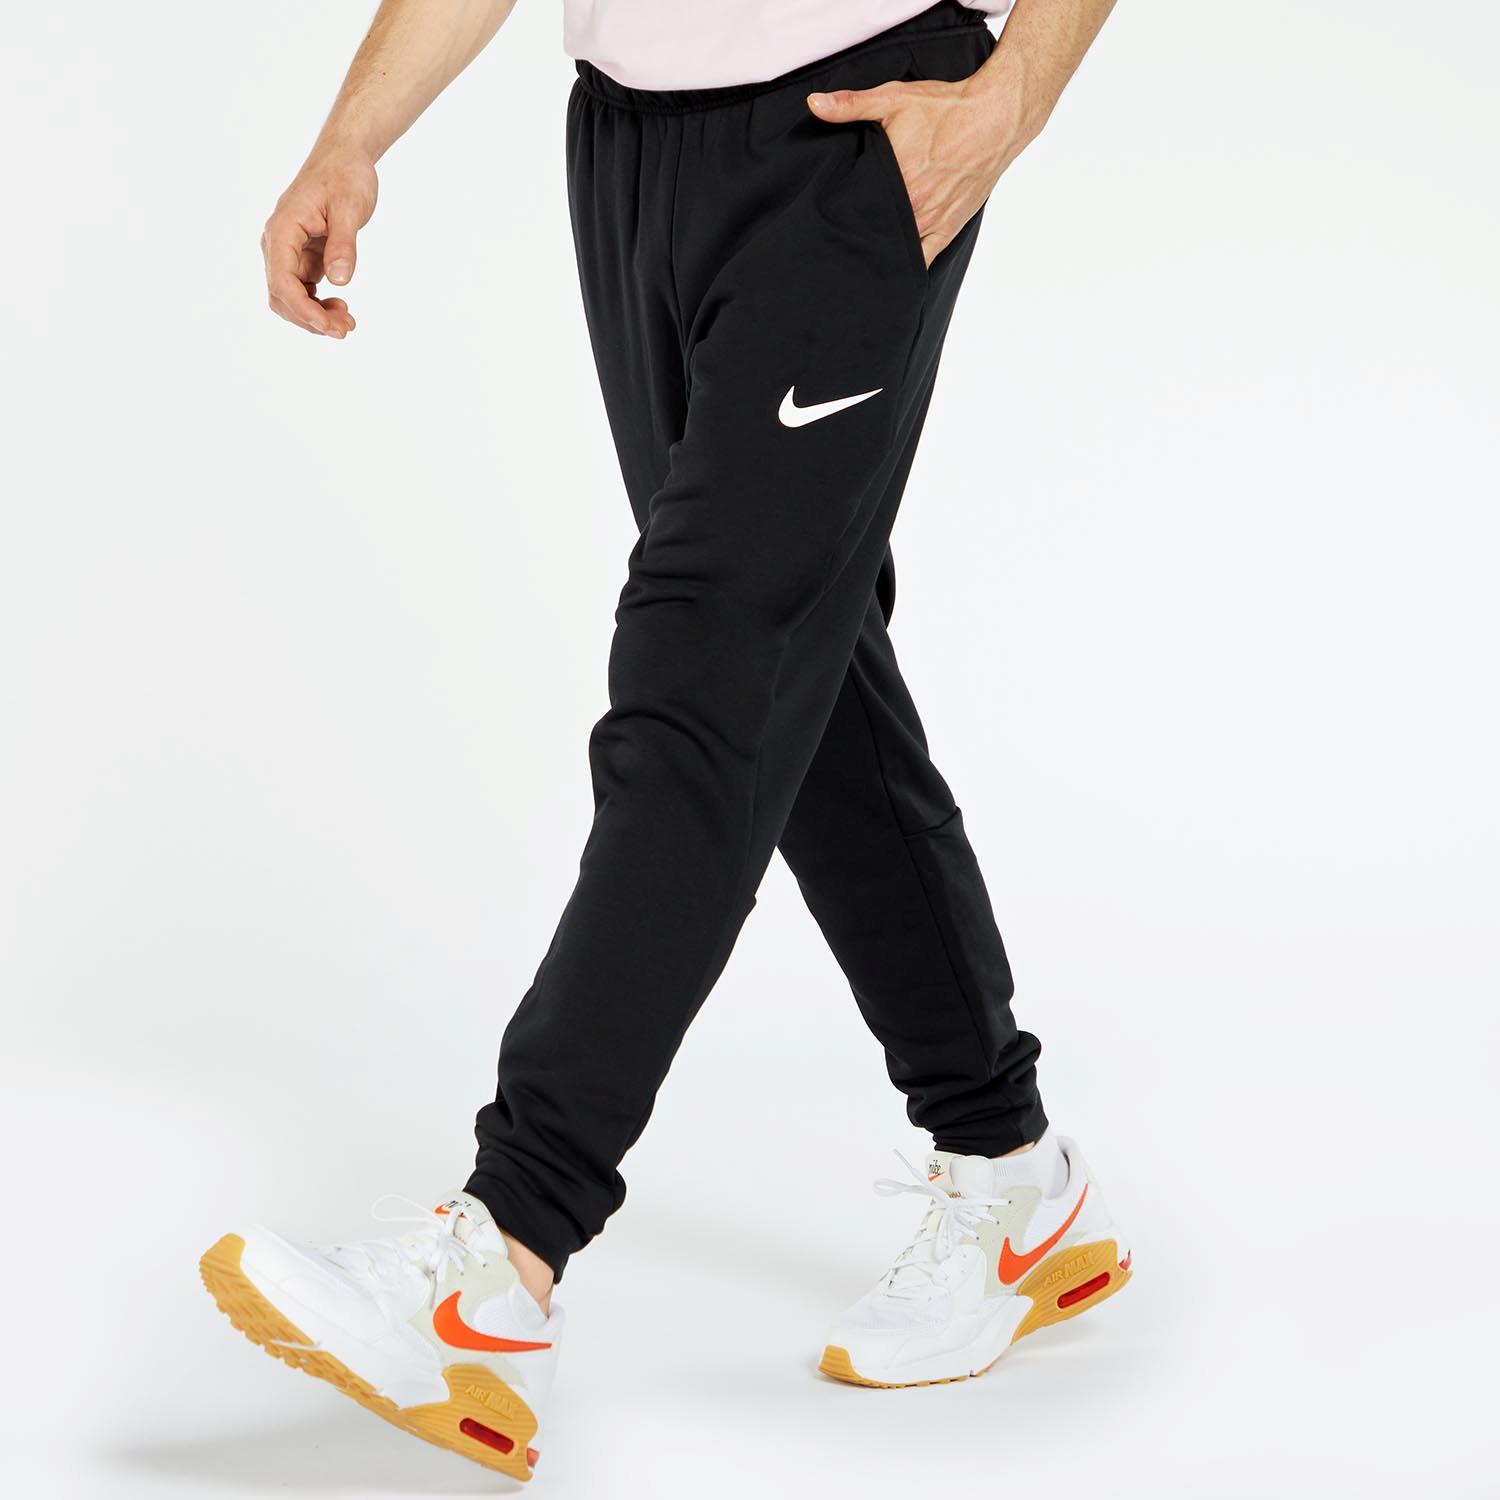 Nike leggings xl